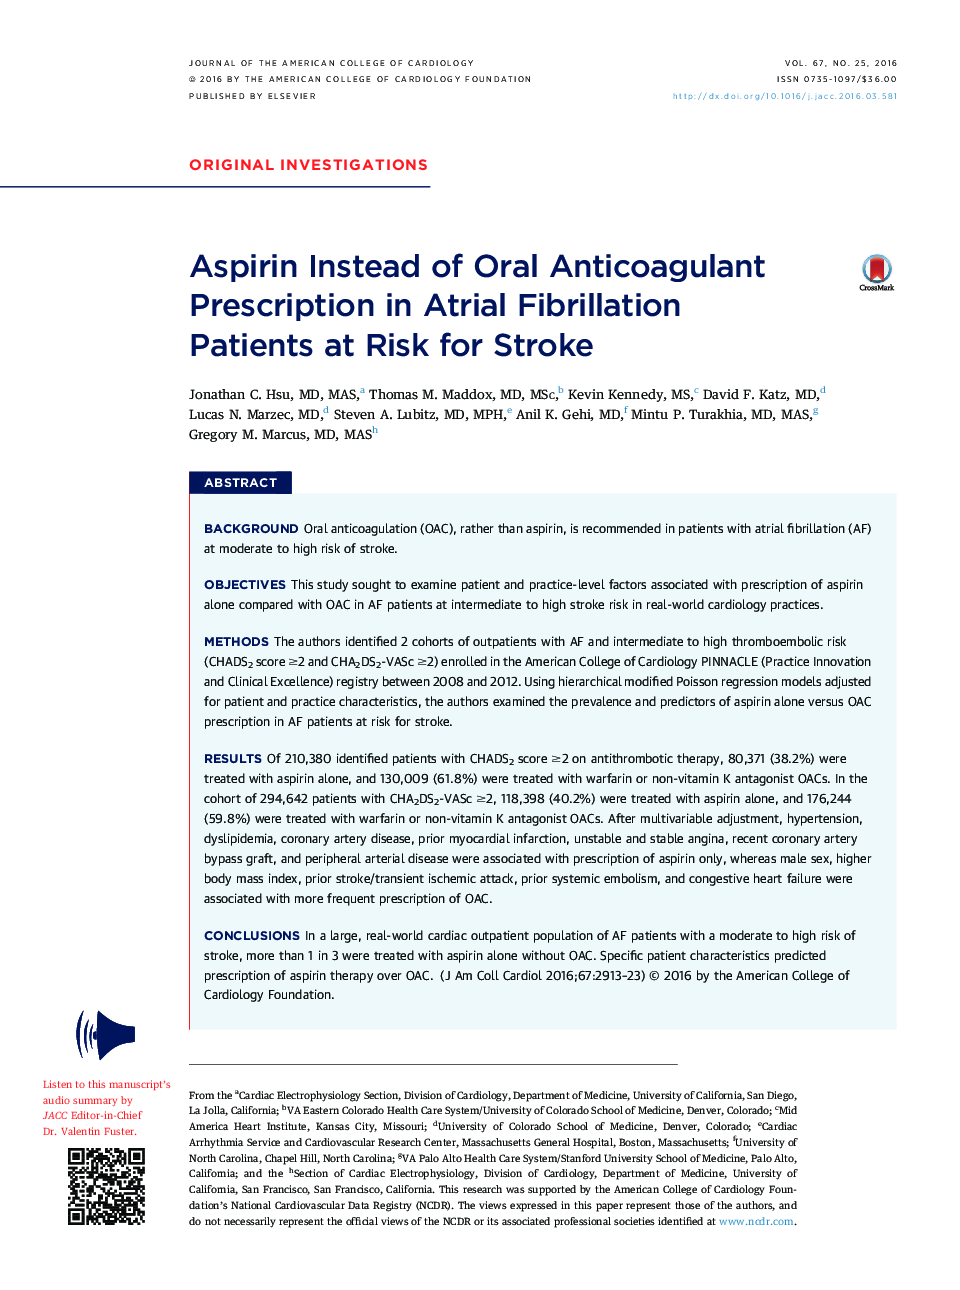 Aspirin Instead of Oral Anticoagulant Prescription in Atrial Fibrillation PatientsÂ atÂ Risk for Stroke